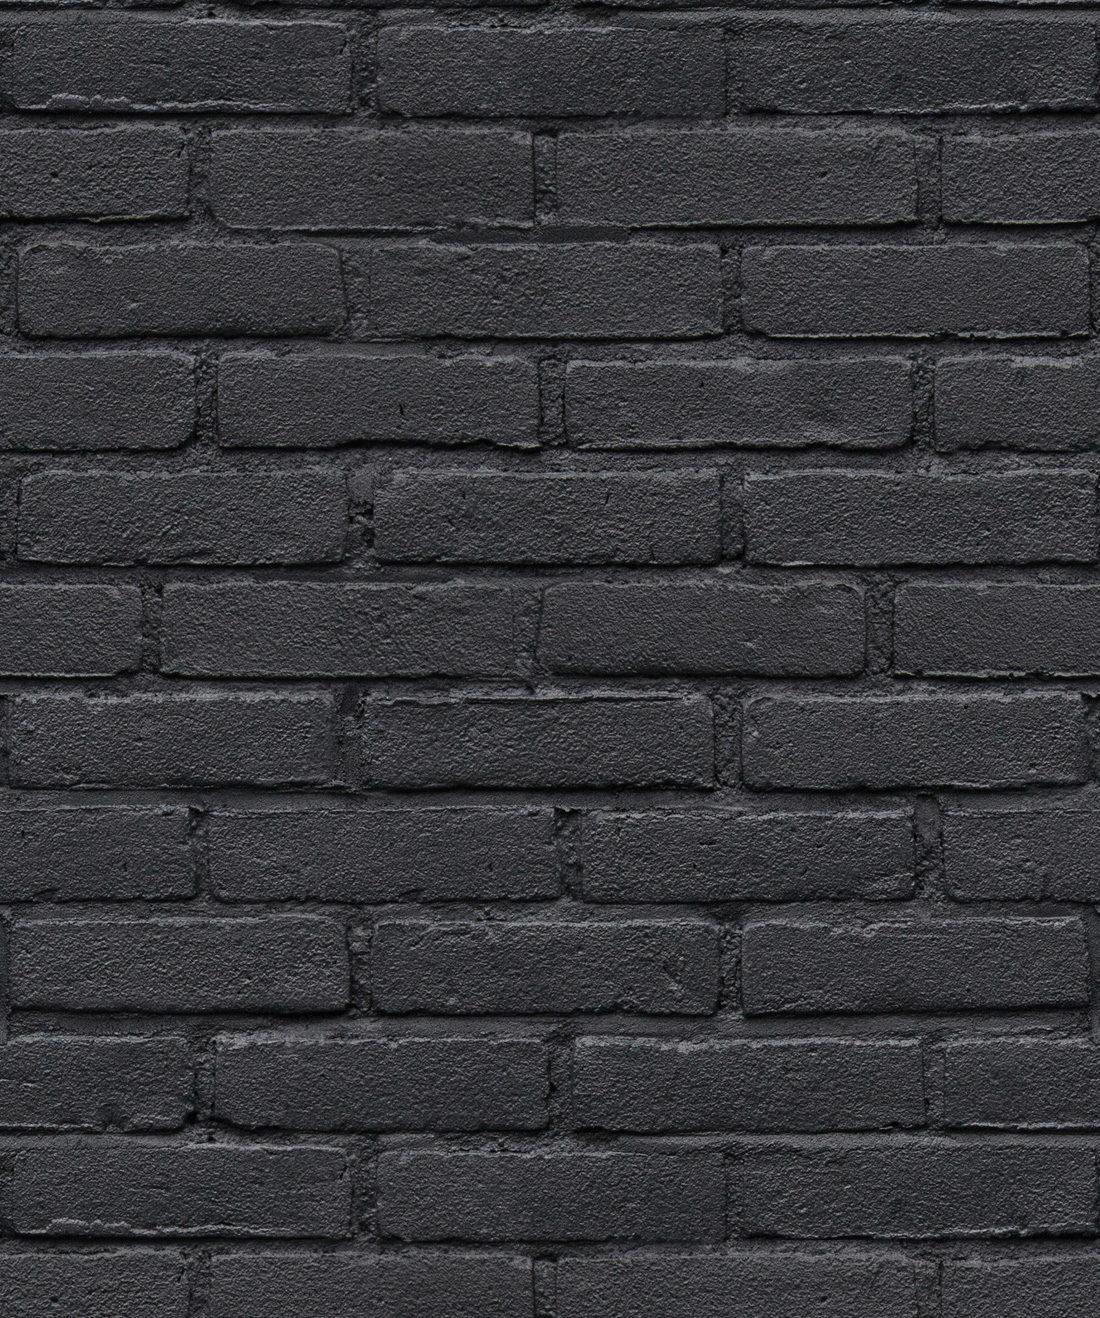 Amsterdam Bricks Removable Wallpaper • Black Bricks AUS